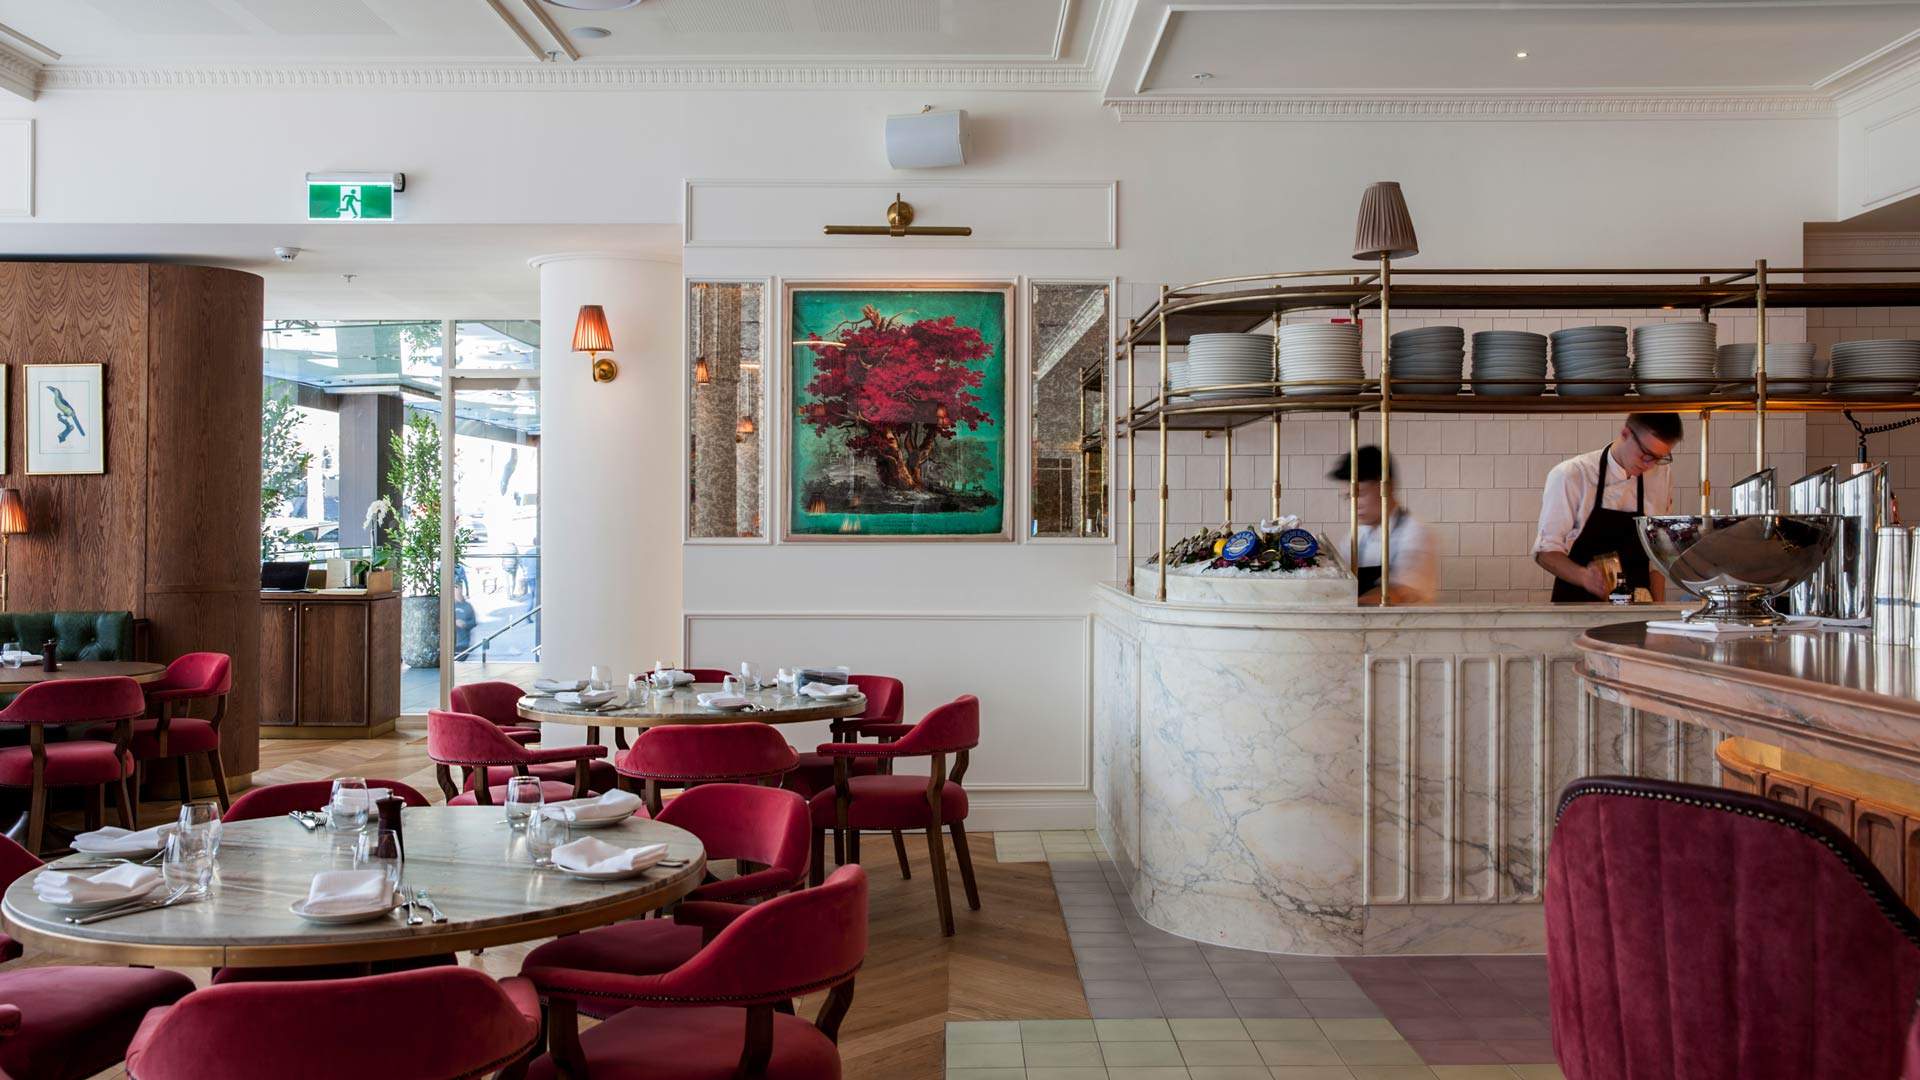 France Brasserie - one of the best restaurants in Sydney.